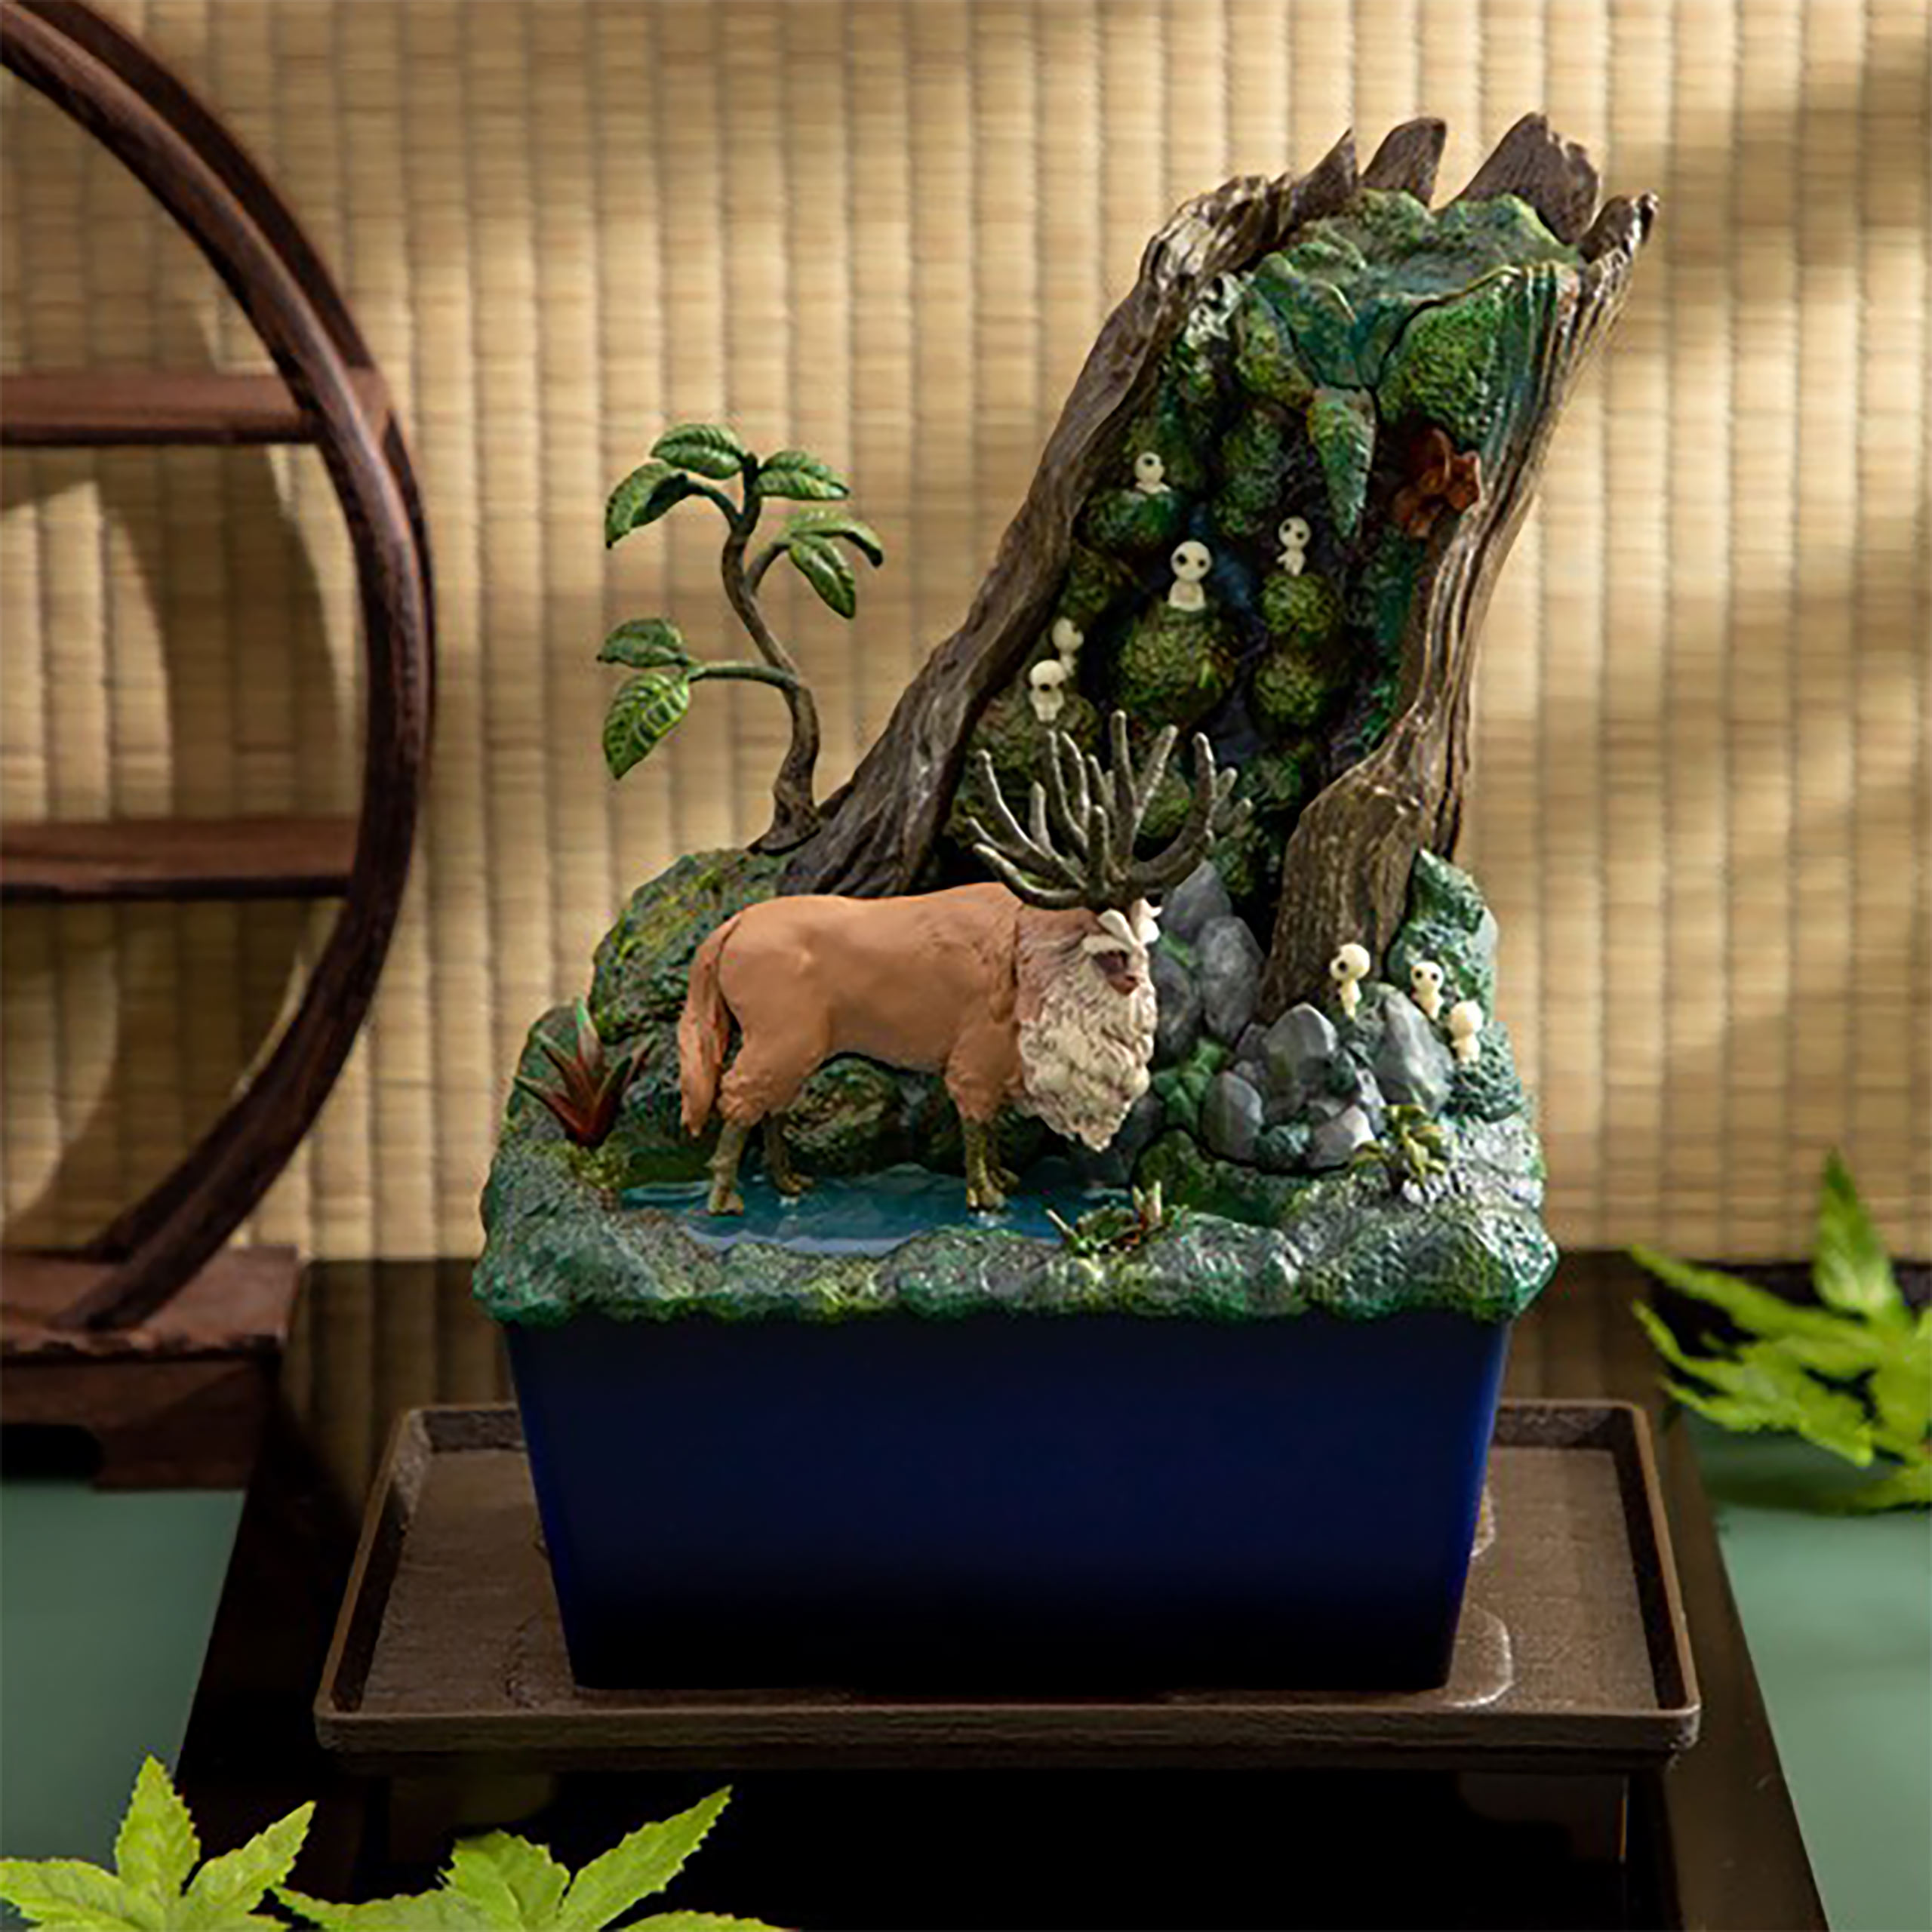 Prinzessin Mononoke - Mysterious Forest Water Garden Bonsai Diorama